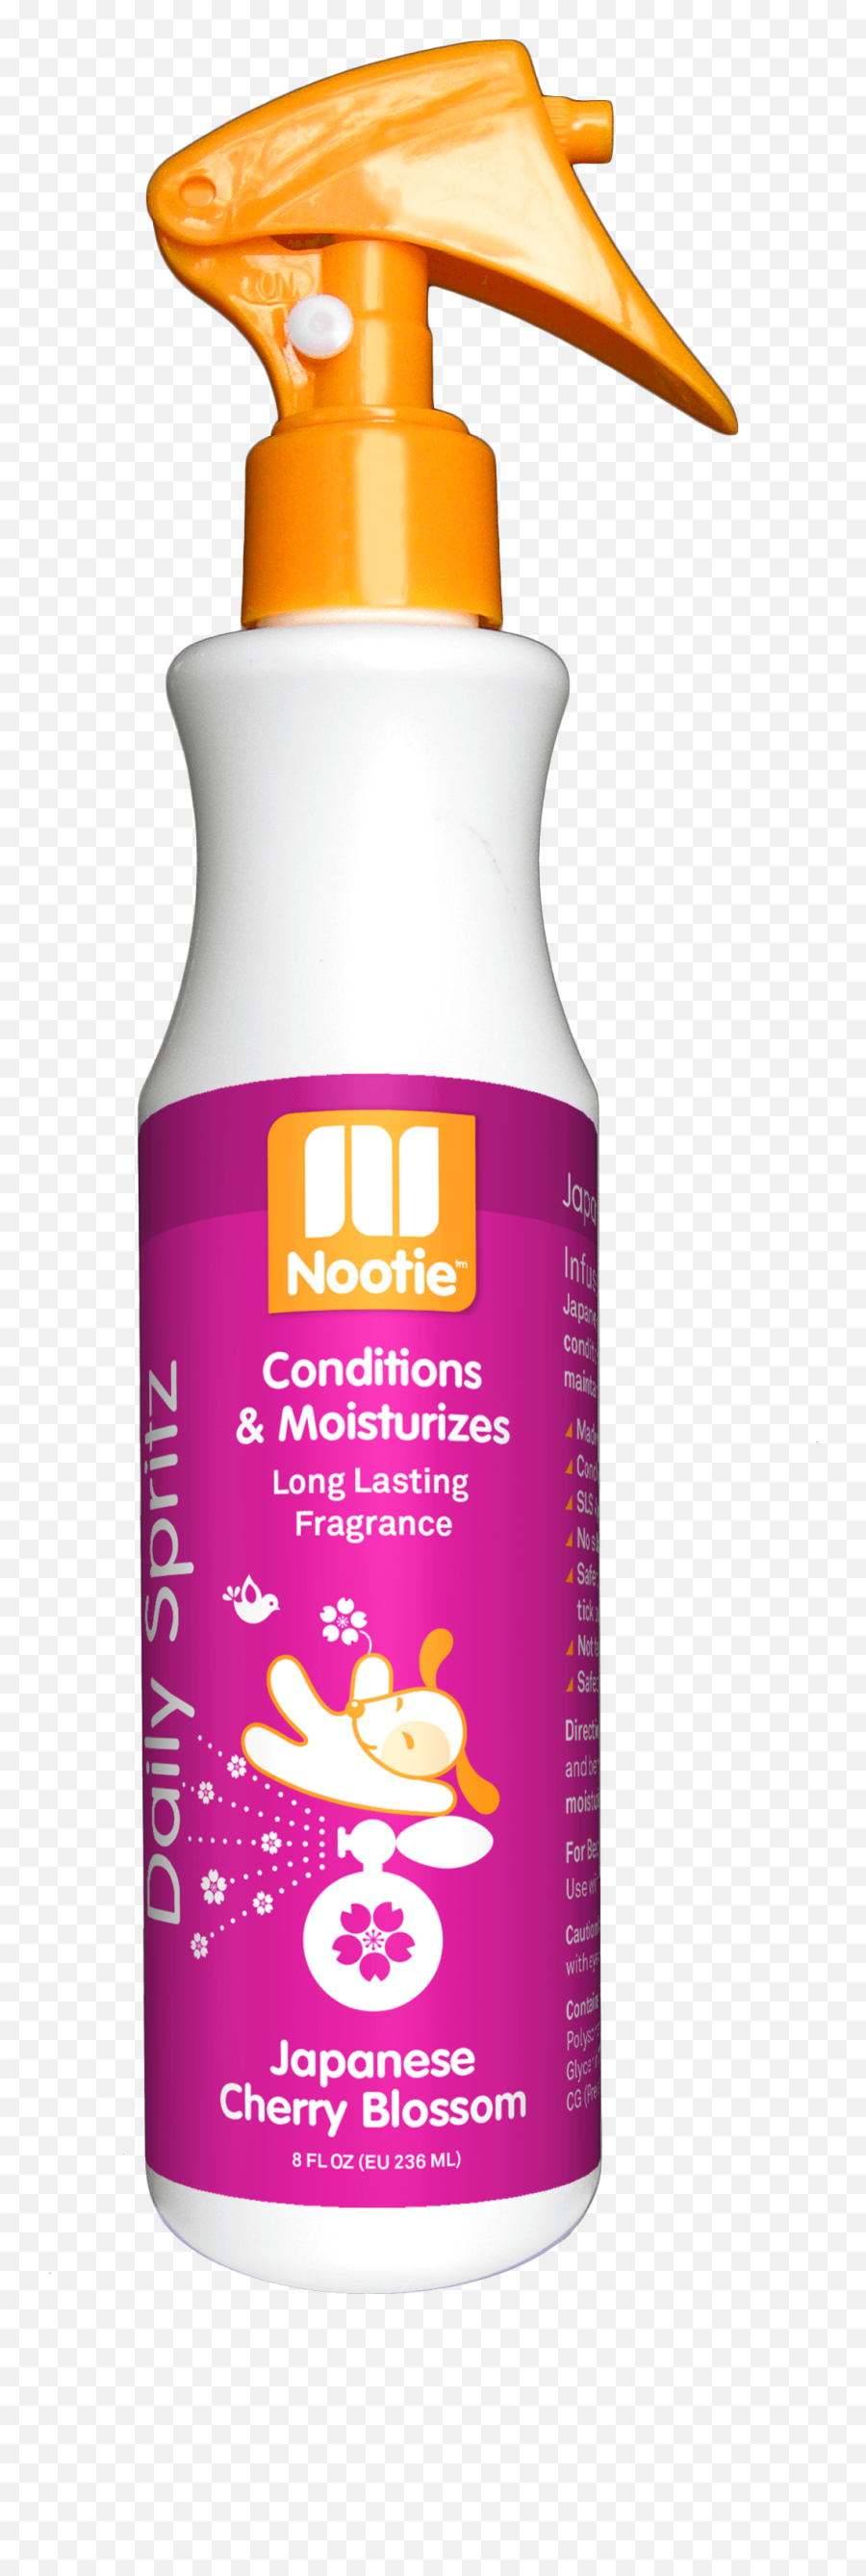 8oz Daily Spritz Conditioning U0026 Moisturizing Spray U2013 Japanese Cherry Blossom - Nootie Shampoo And Spray Emoji,Cherry Blossom Png